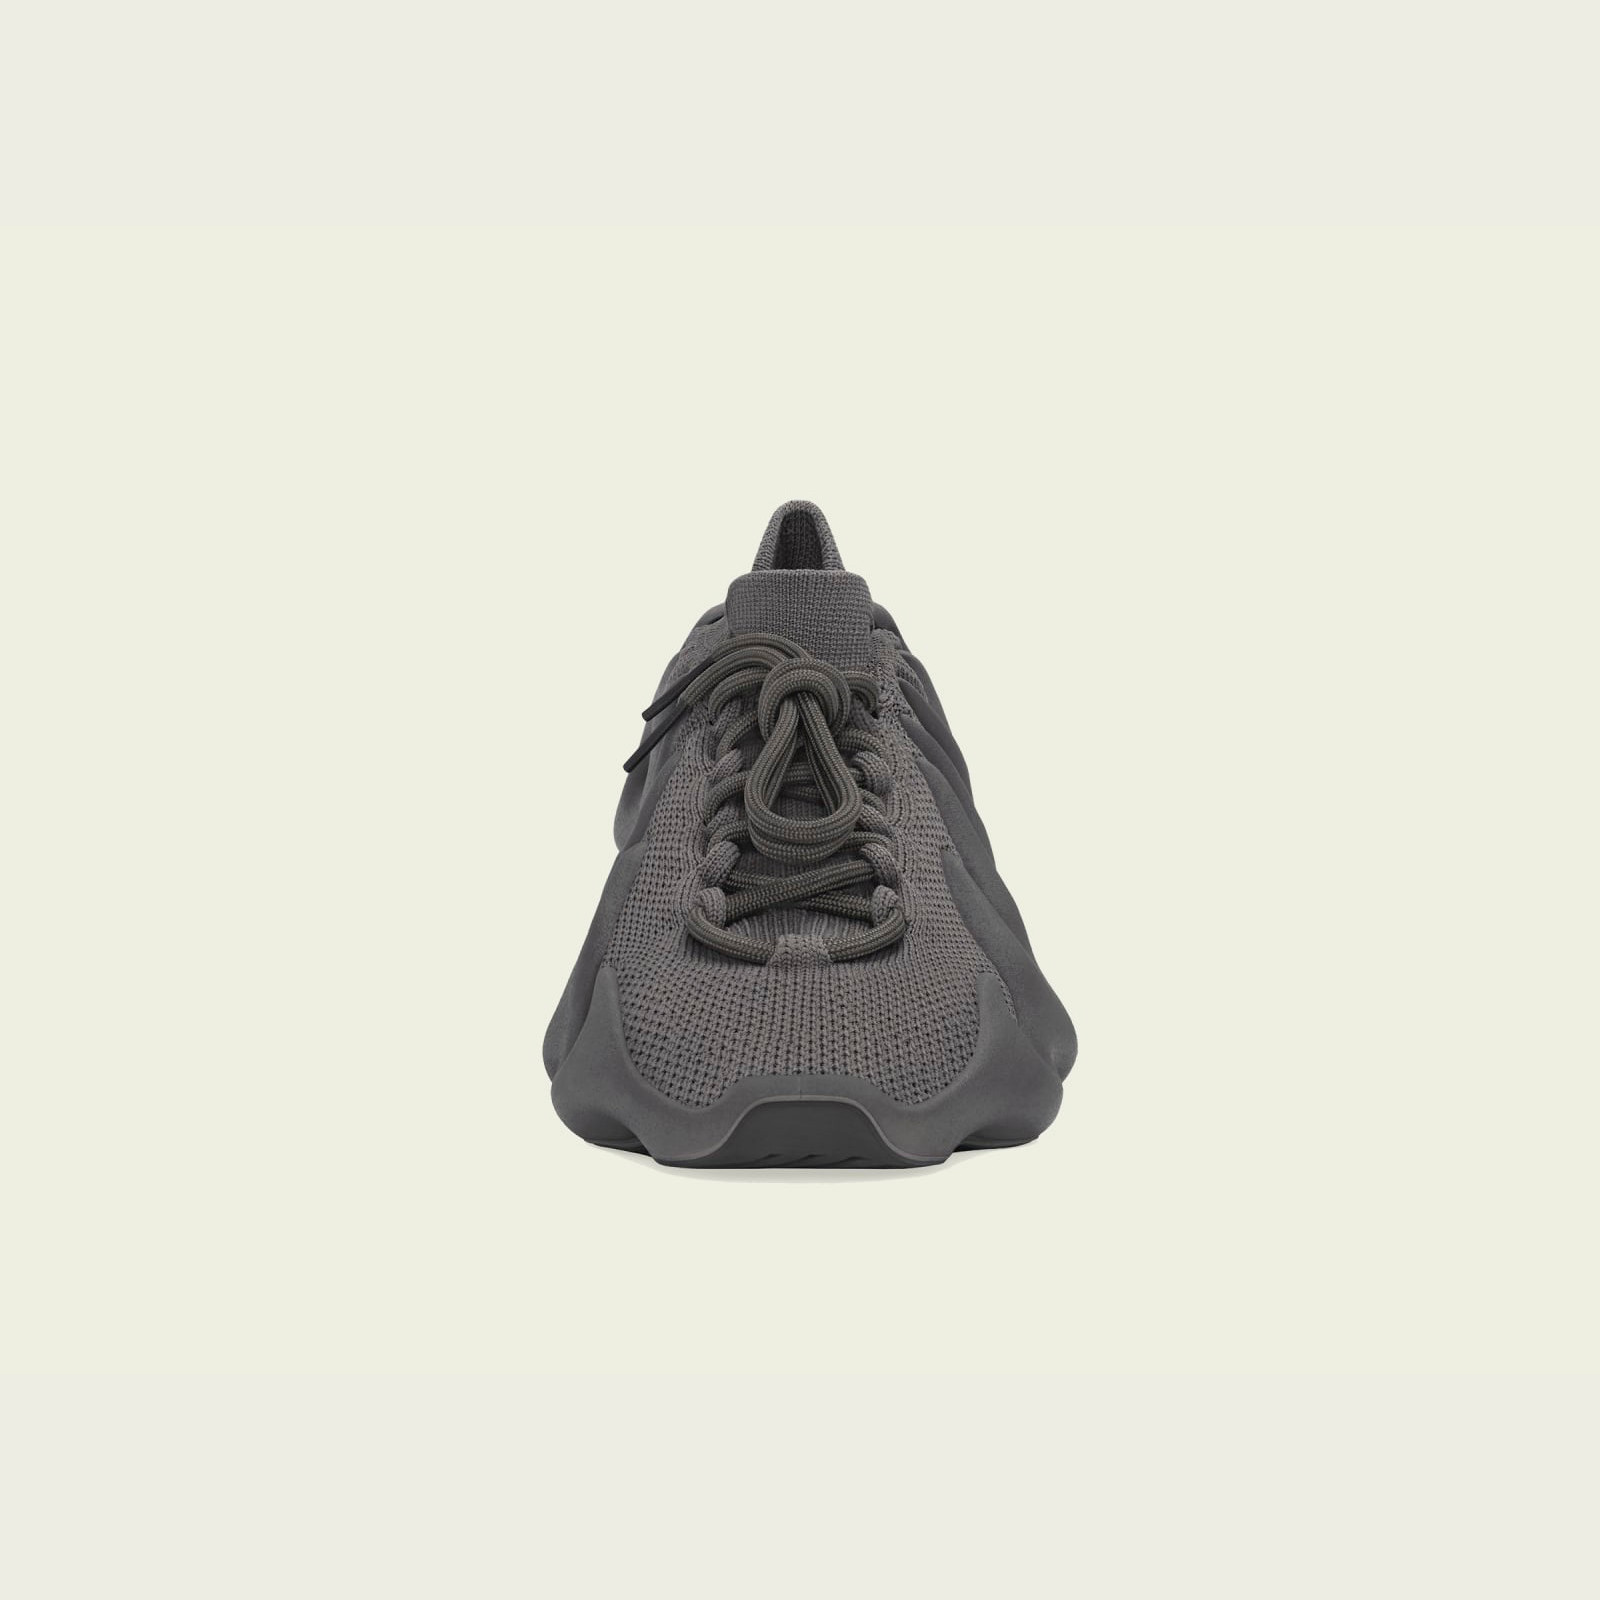 Adidas Yeezy 450
« Cinder »